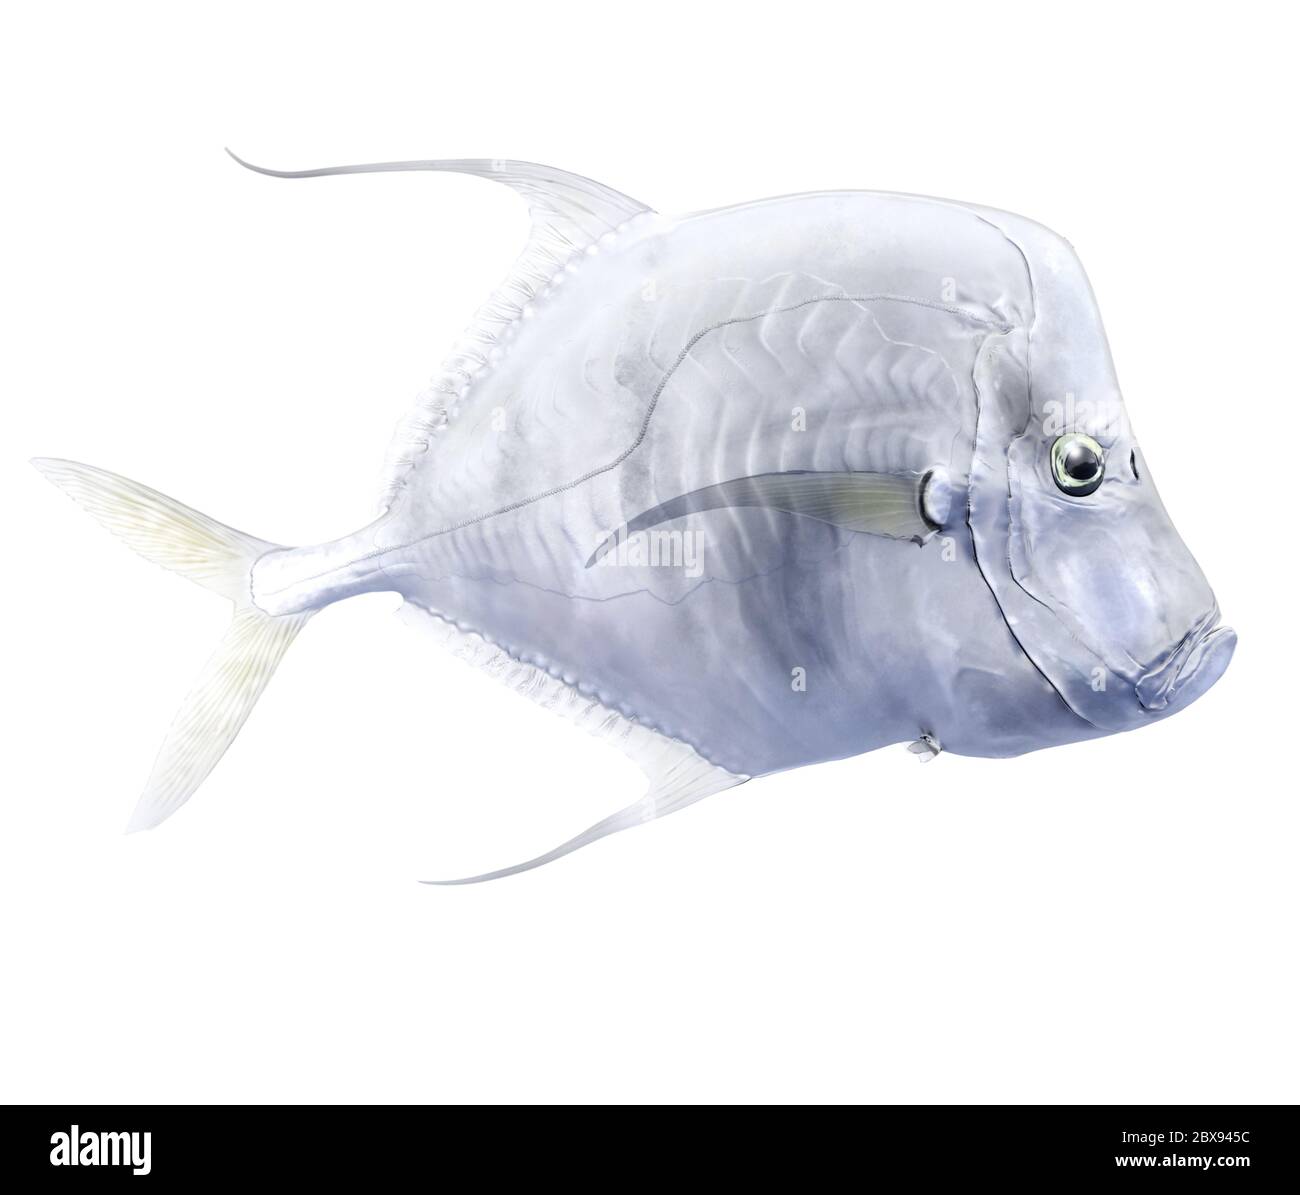 Pelagic fish species Cut Out Stock Images & Pictures - Alamy